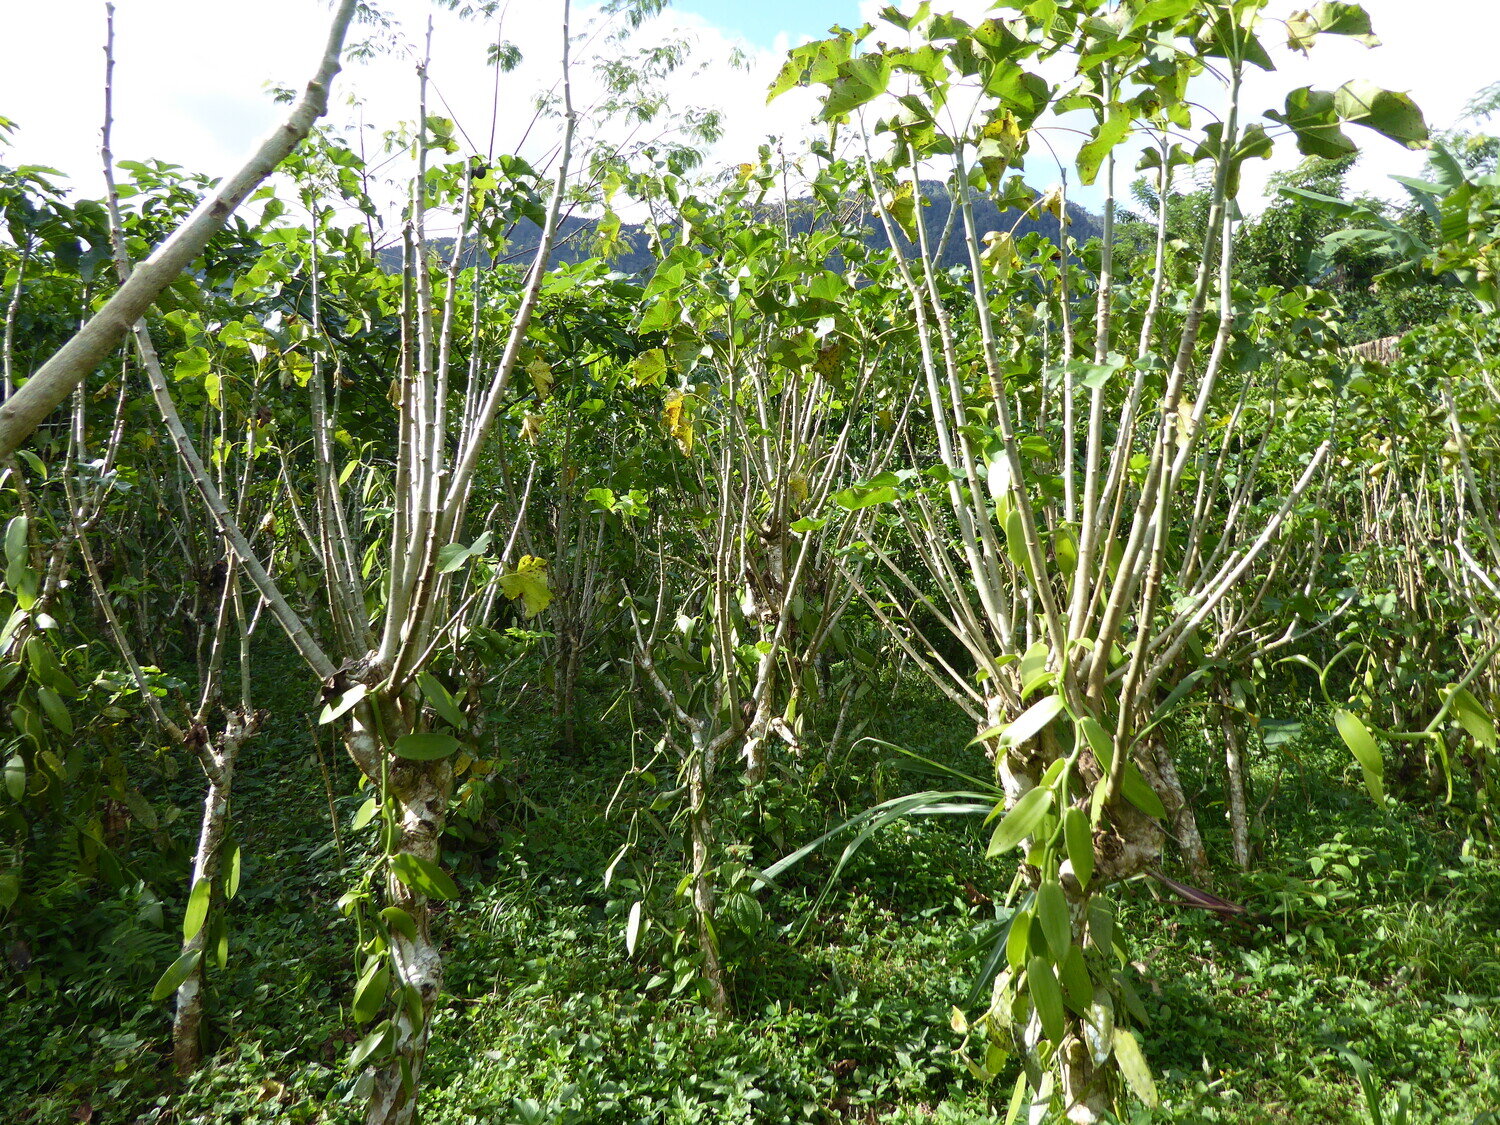 Vanilla cultivation on fallow land promotes biodiversity